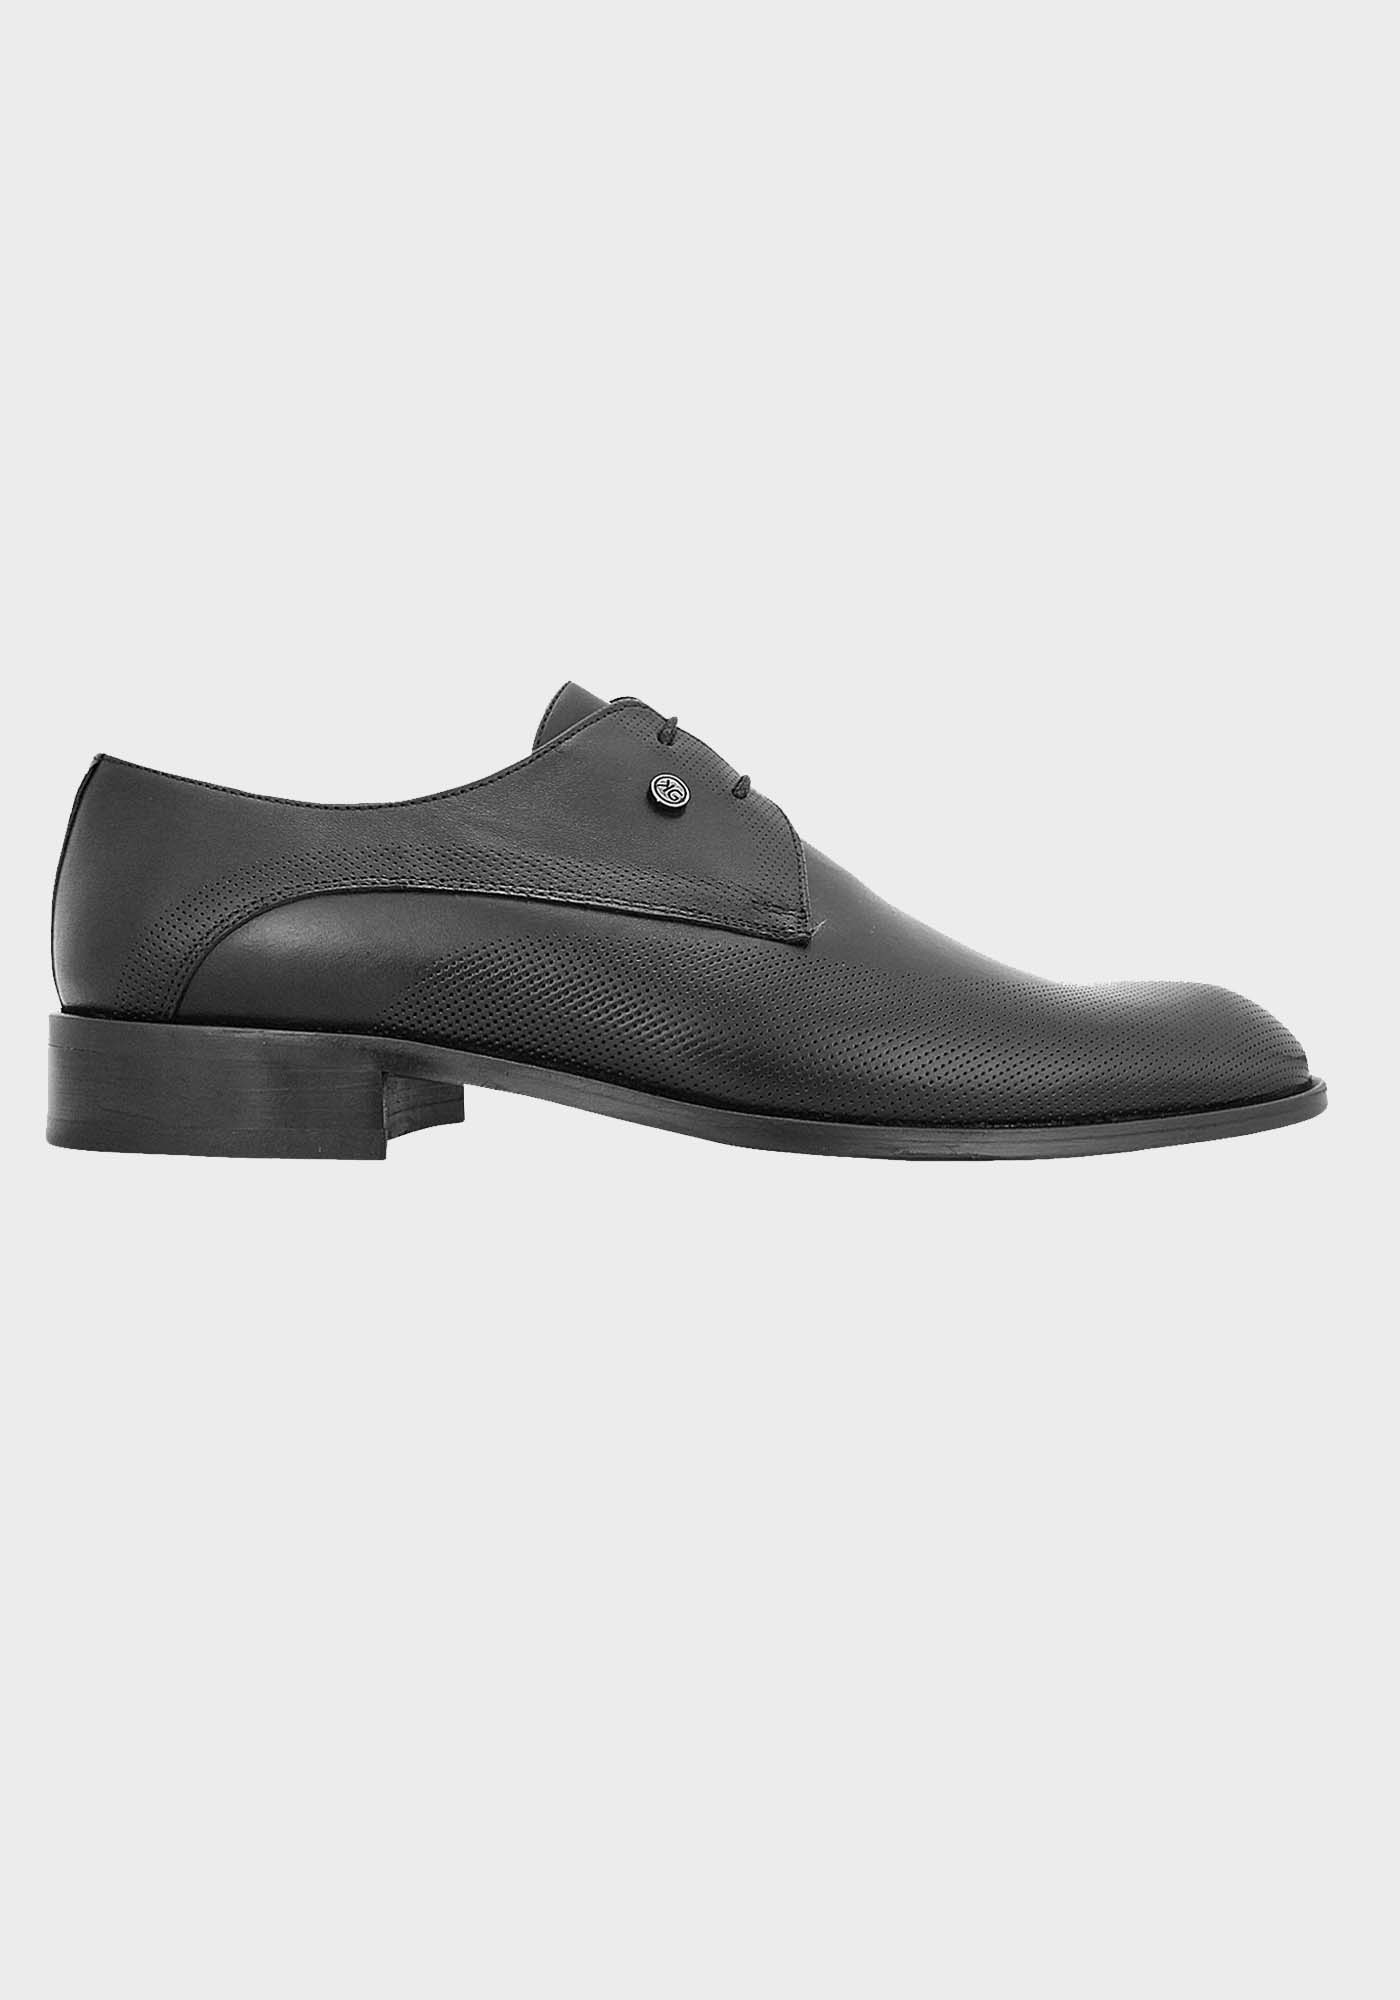 GK Uomo Δερμάτινα Παπούτσια της σειράς Sans - GK15618 34 Black 9383